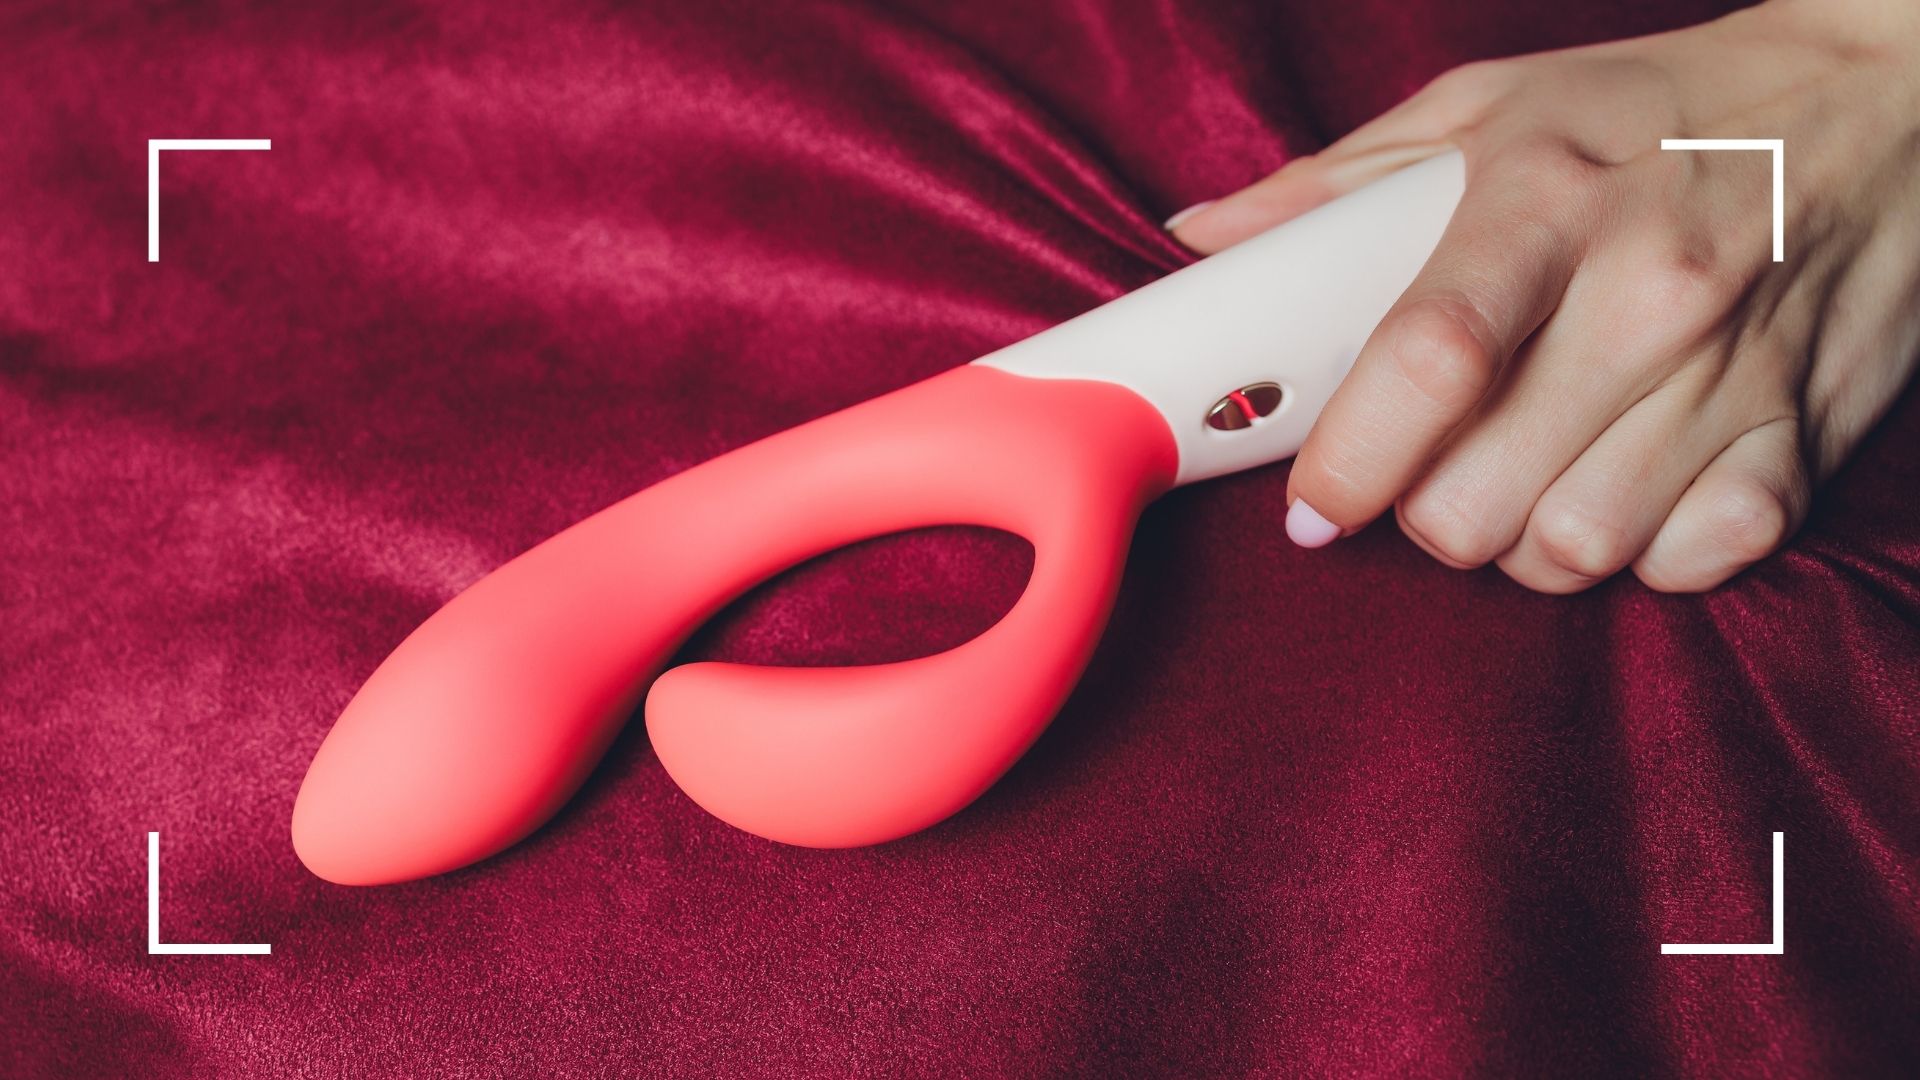 Perfect homemade sex toy for men homemade fr